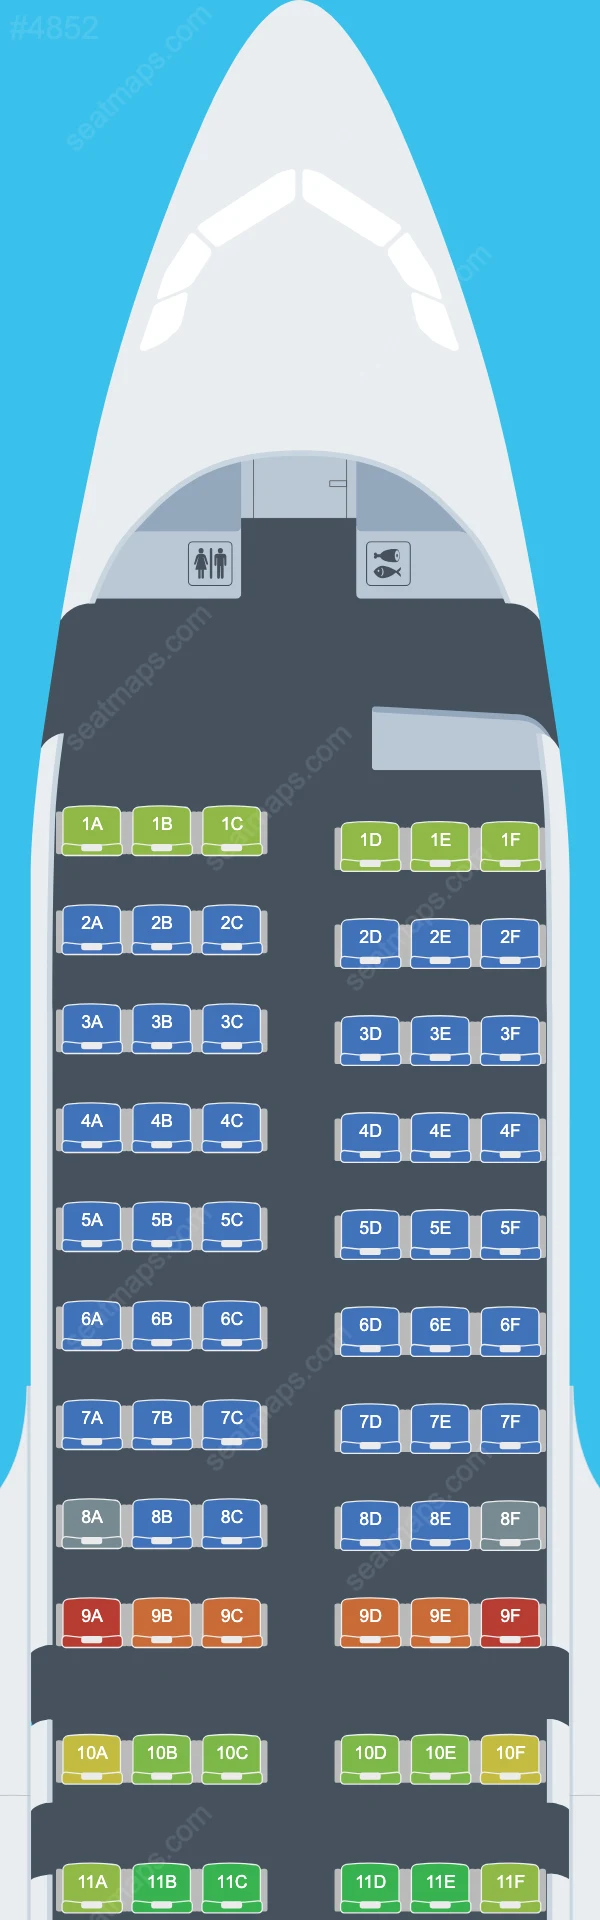 Схема салона easyJet Switzerland в самолете Airbus A319 A319-100